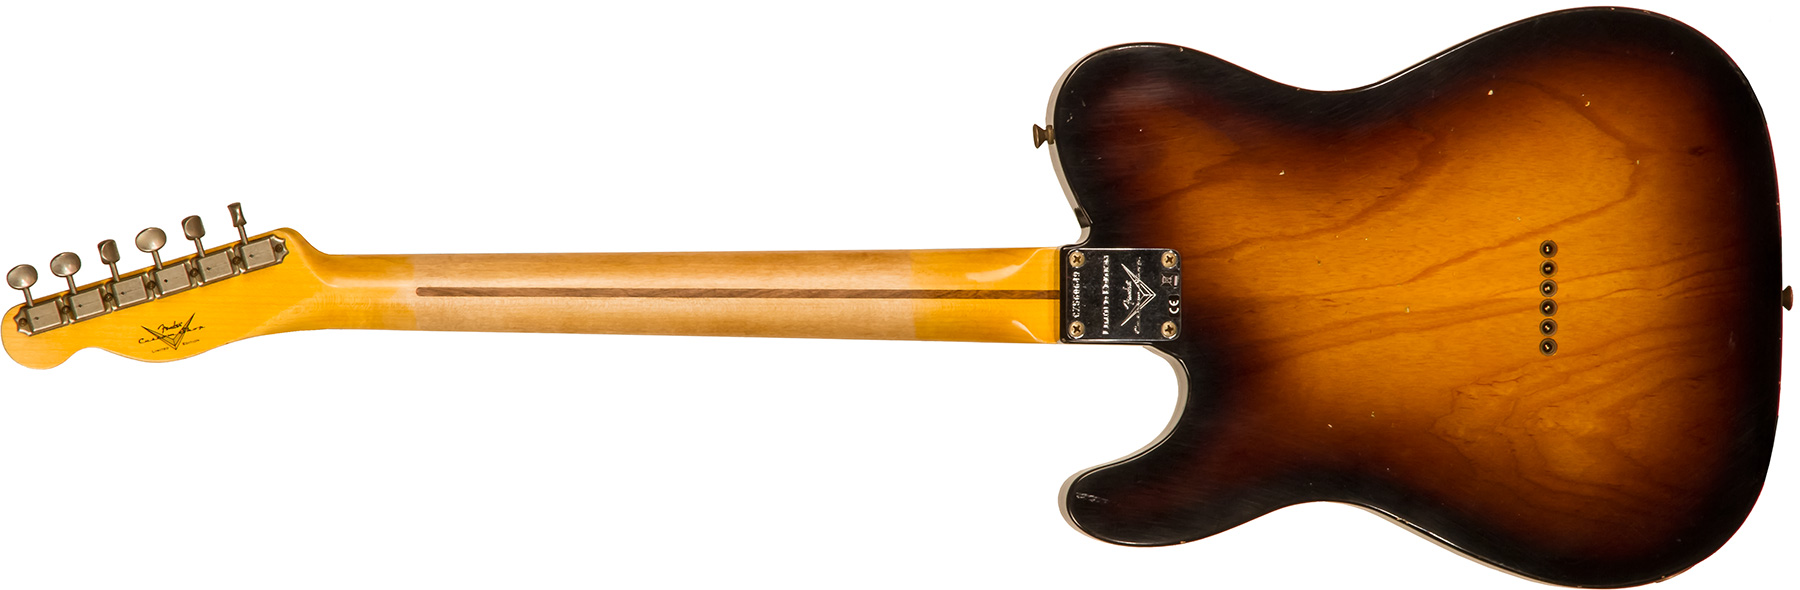 Fender Custom Shop Tele 1955 Ltd 2s Ht Mn #cz560649 - Relic Wide Fade 2-color Sunburst - E-Gitarre in Teleform - Variation 1